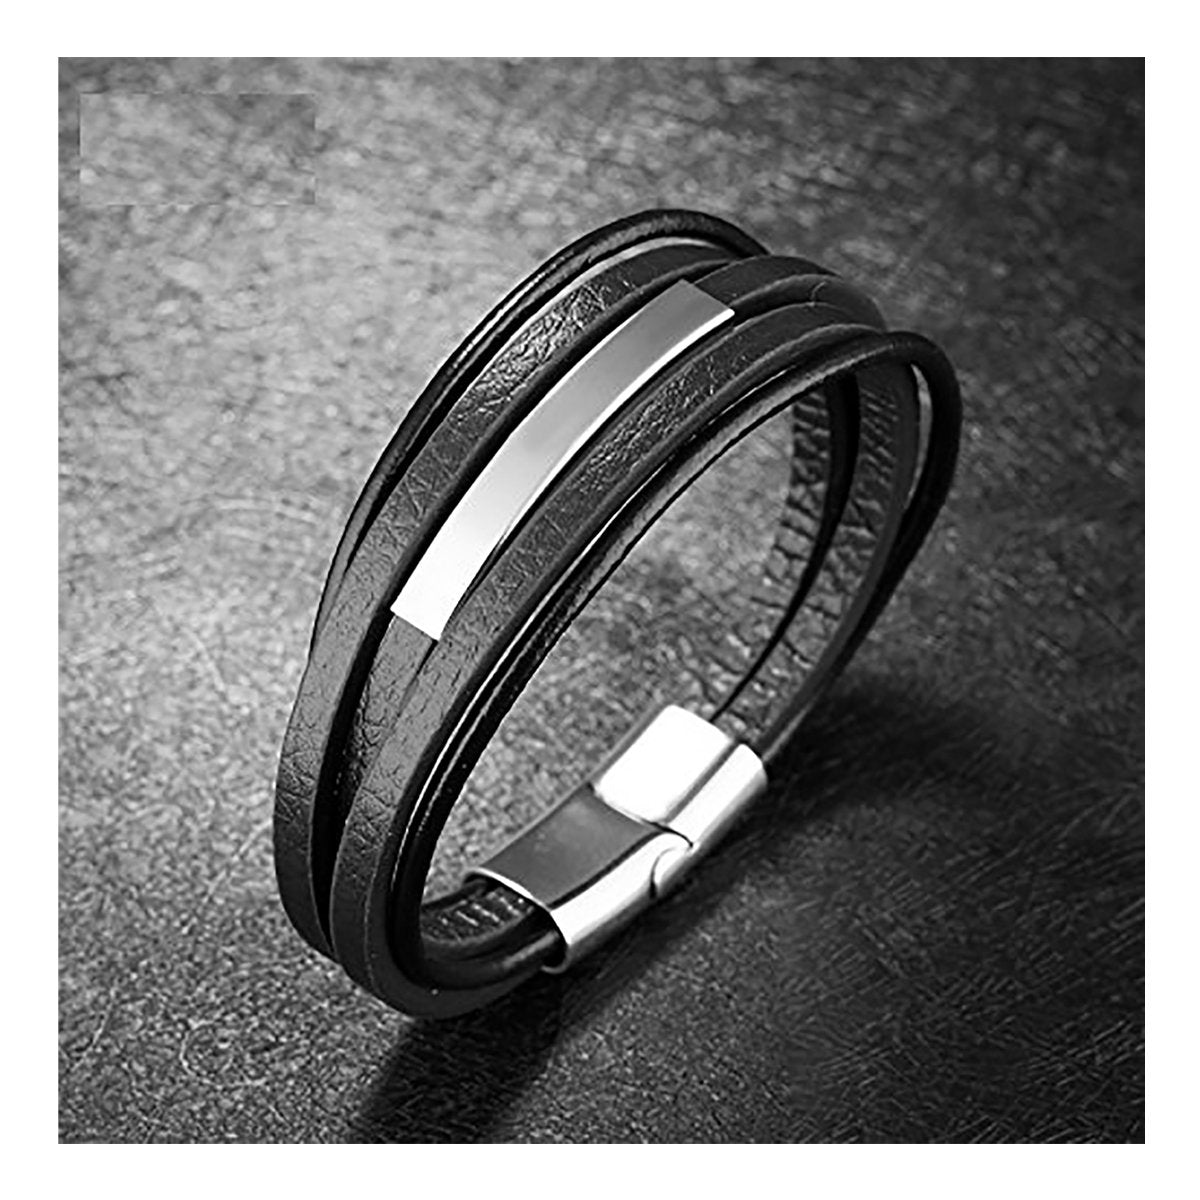 Multi-Layer Black Leather Wrist Wrap Band Strand Bracelet